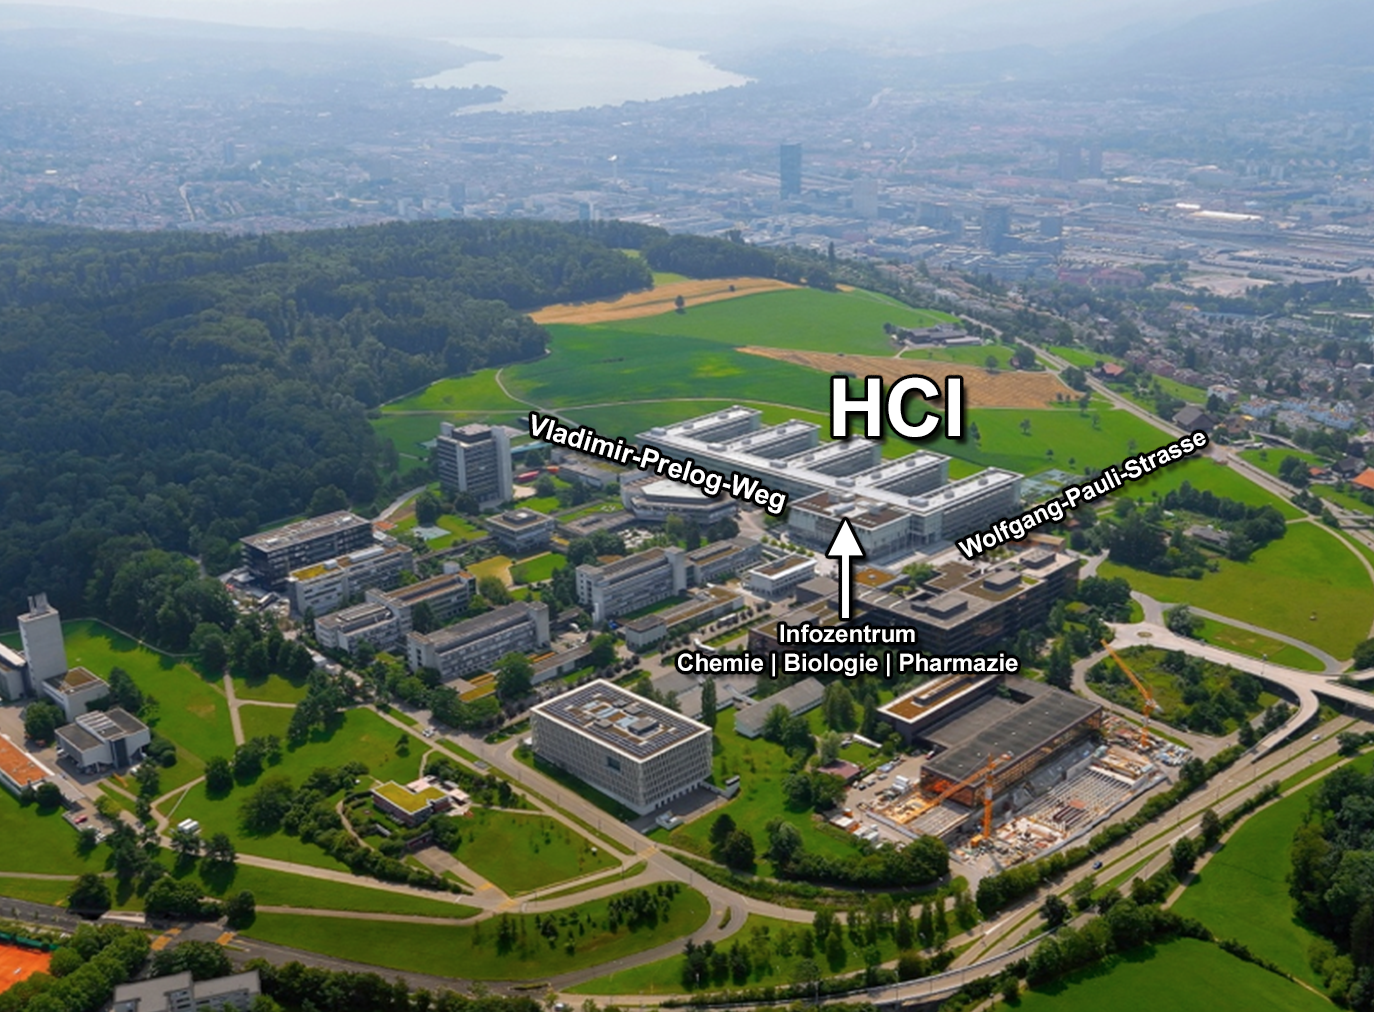 Bird's view of ETH campus Hönggerberg